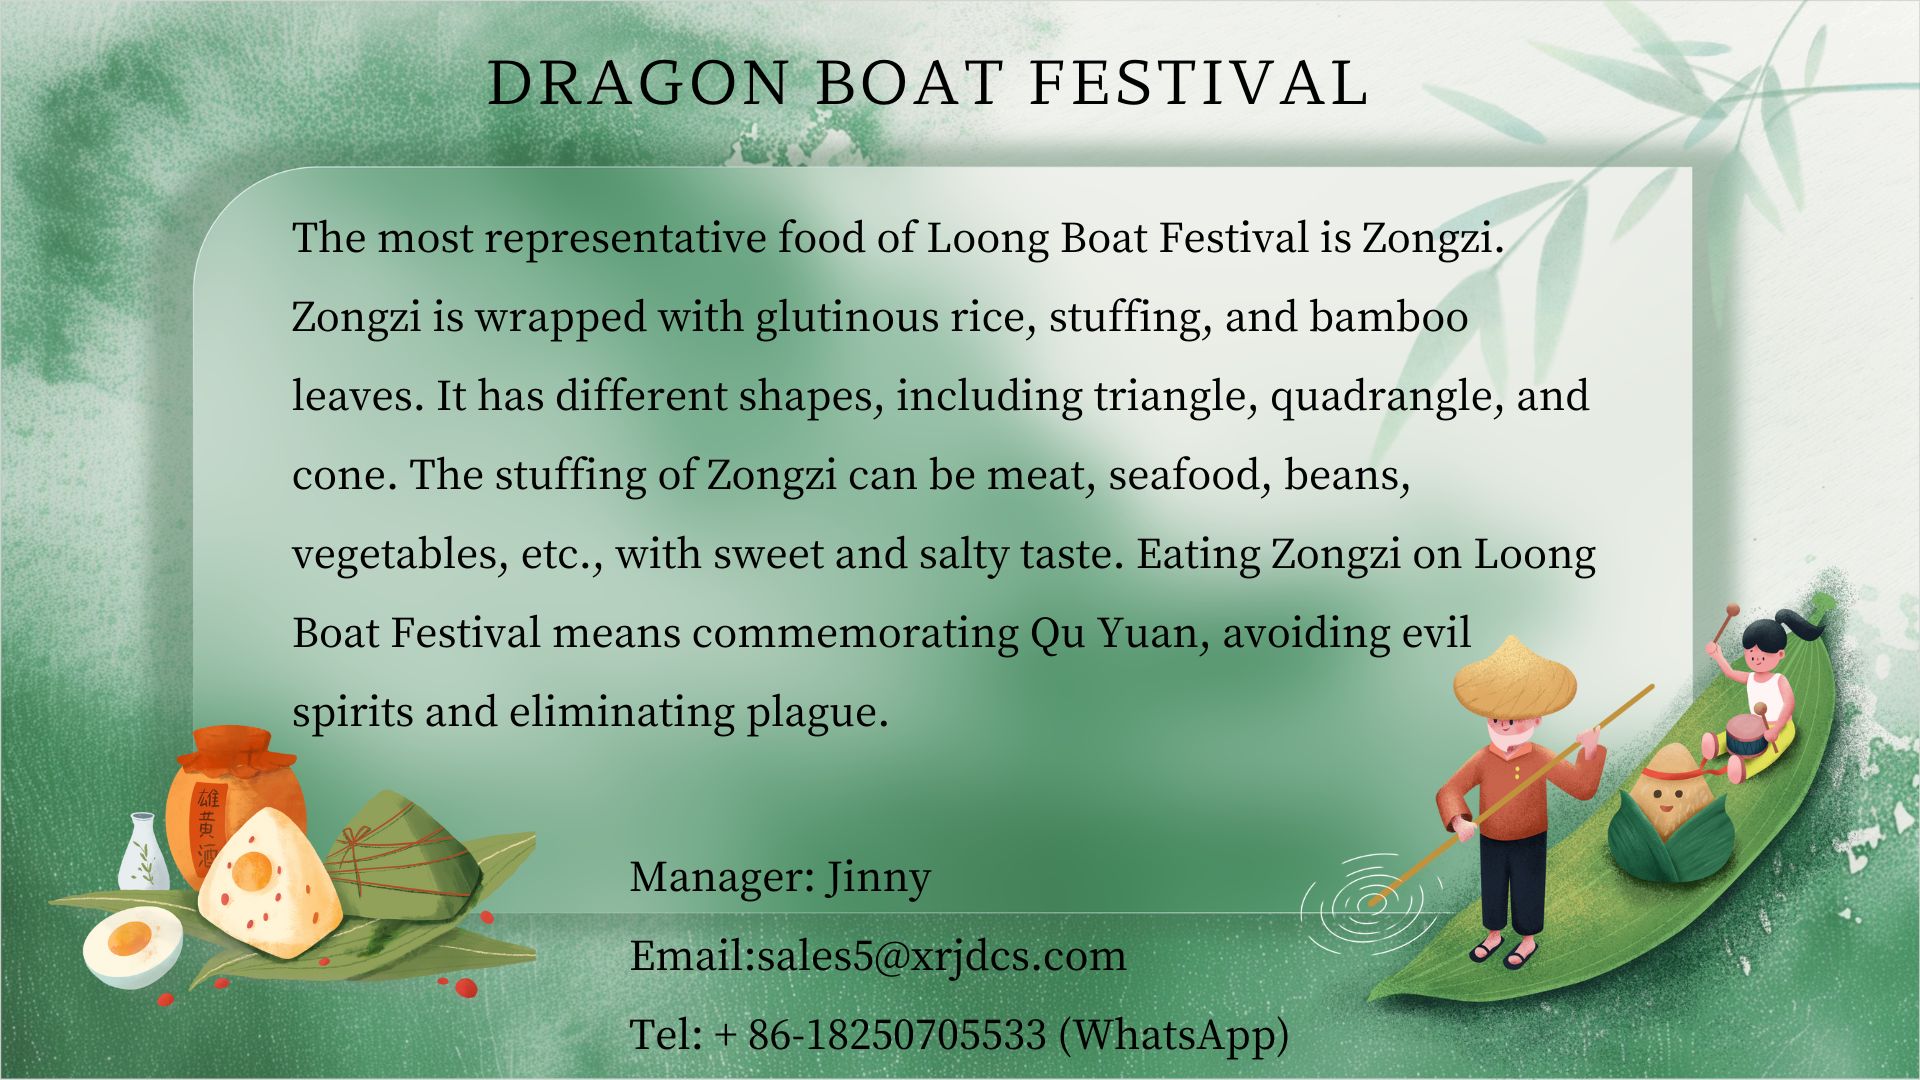 Festa del Dragon Boat Festival dal 6.8 al 6.10